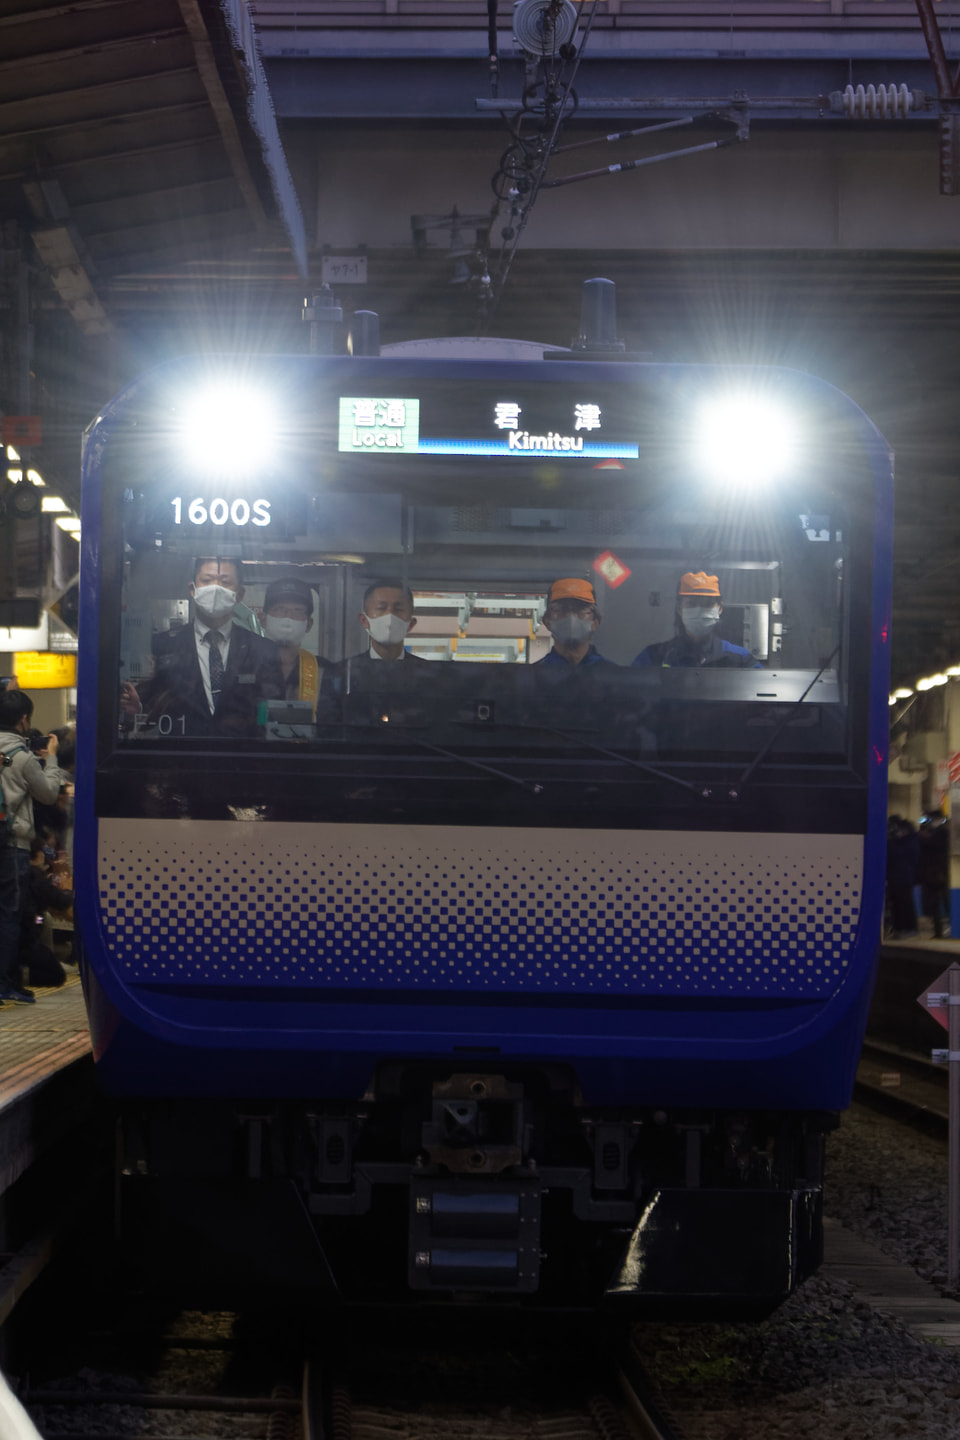 【JR東】横須賀・総武快速線用E235系1000番台営業運転スタートの拡大写真